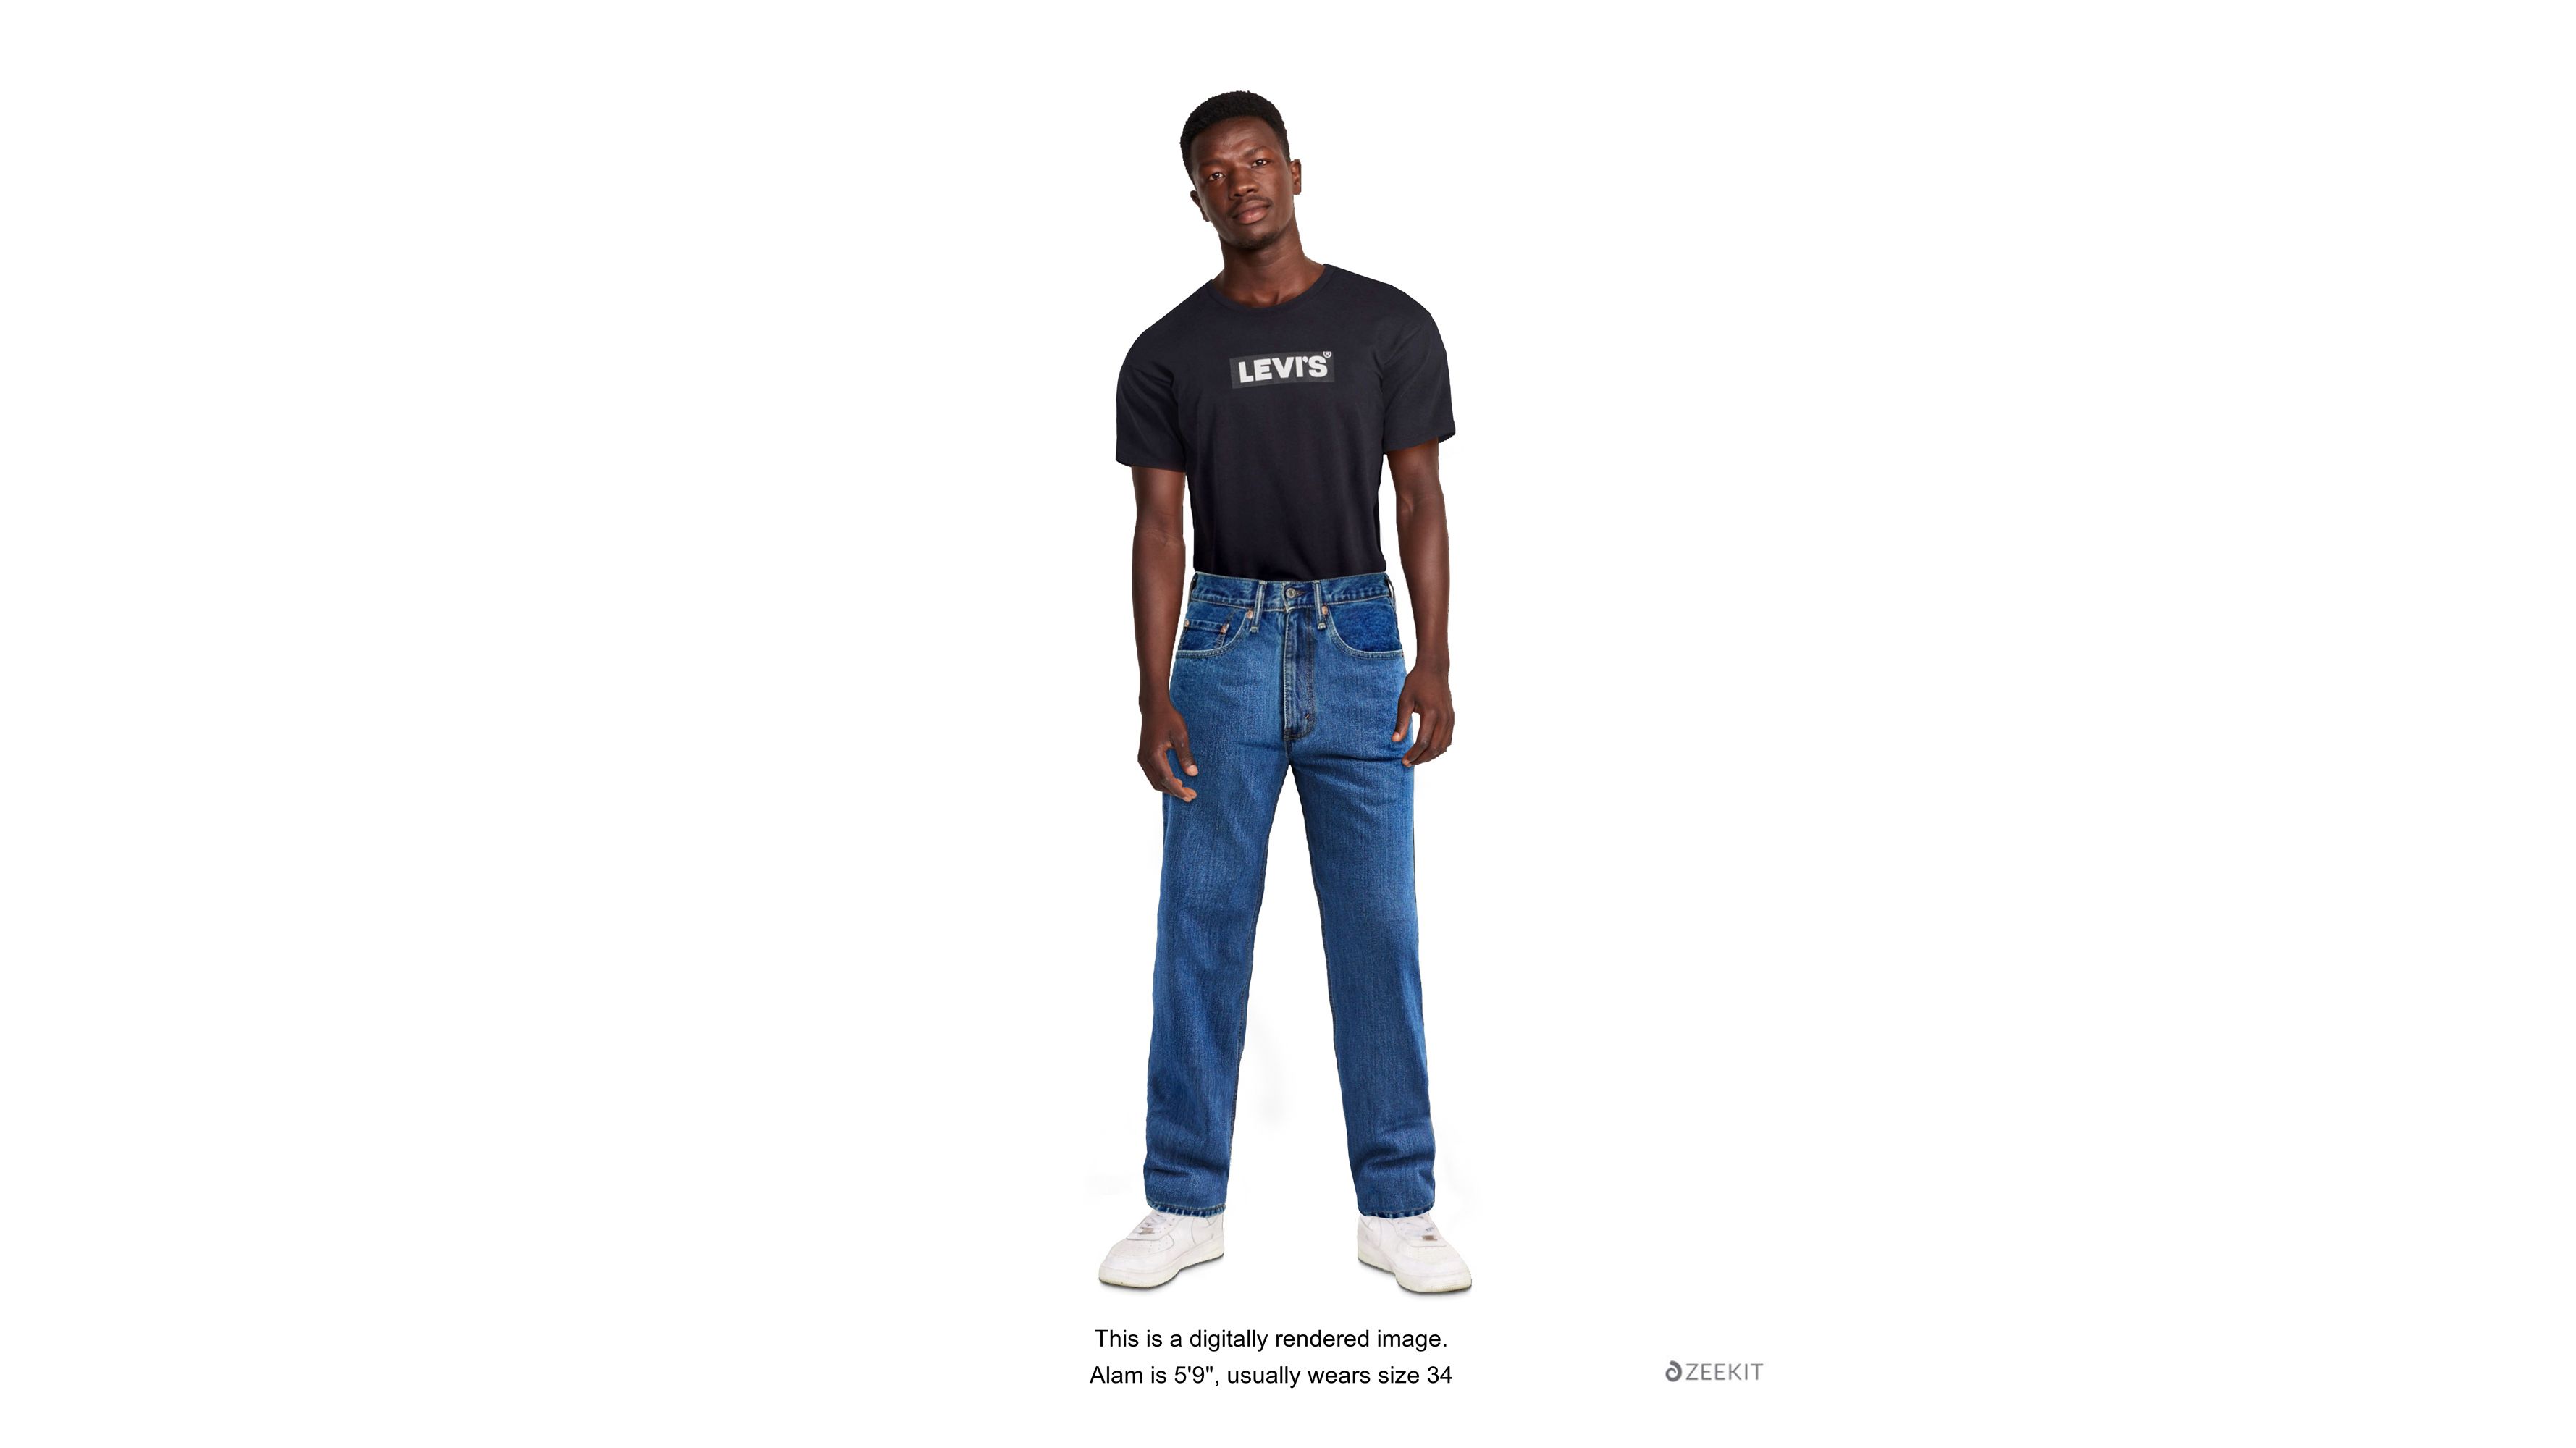 levi 550 stretch jeans